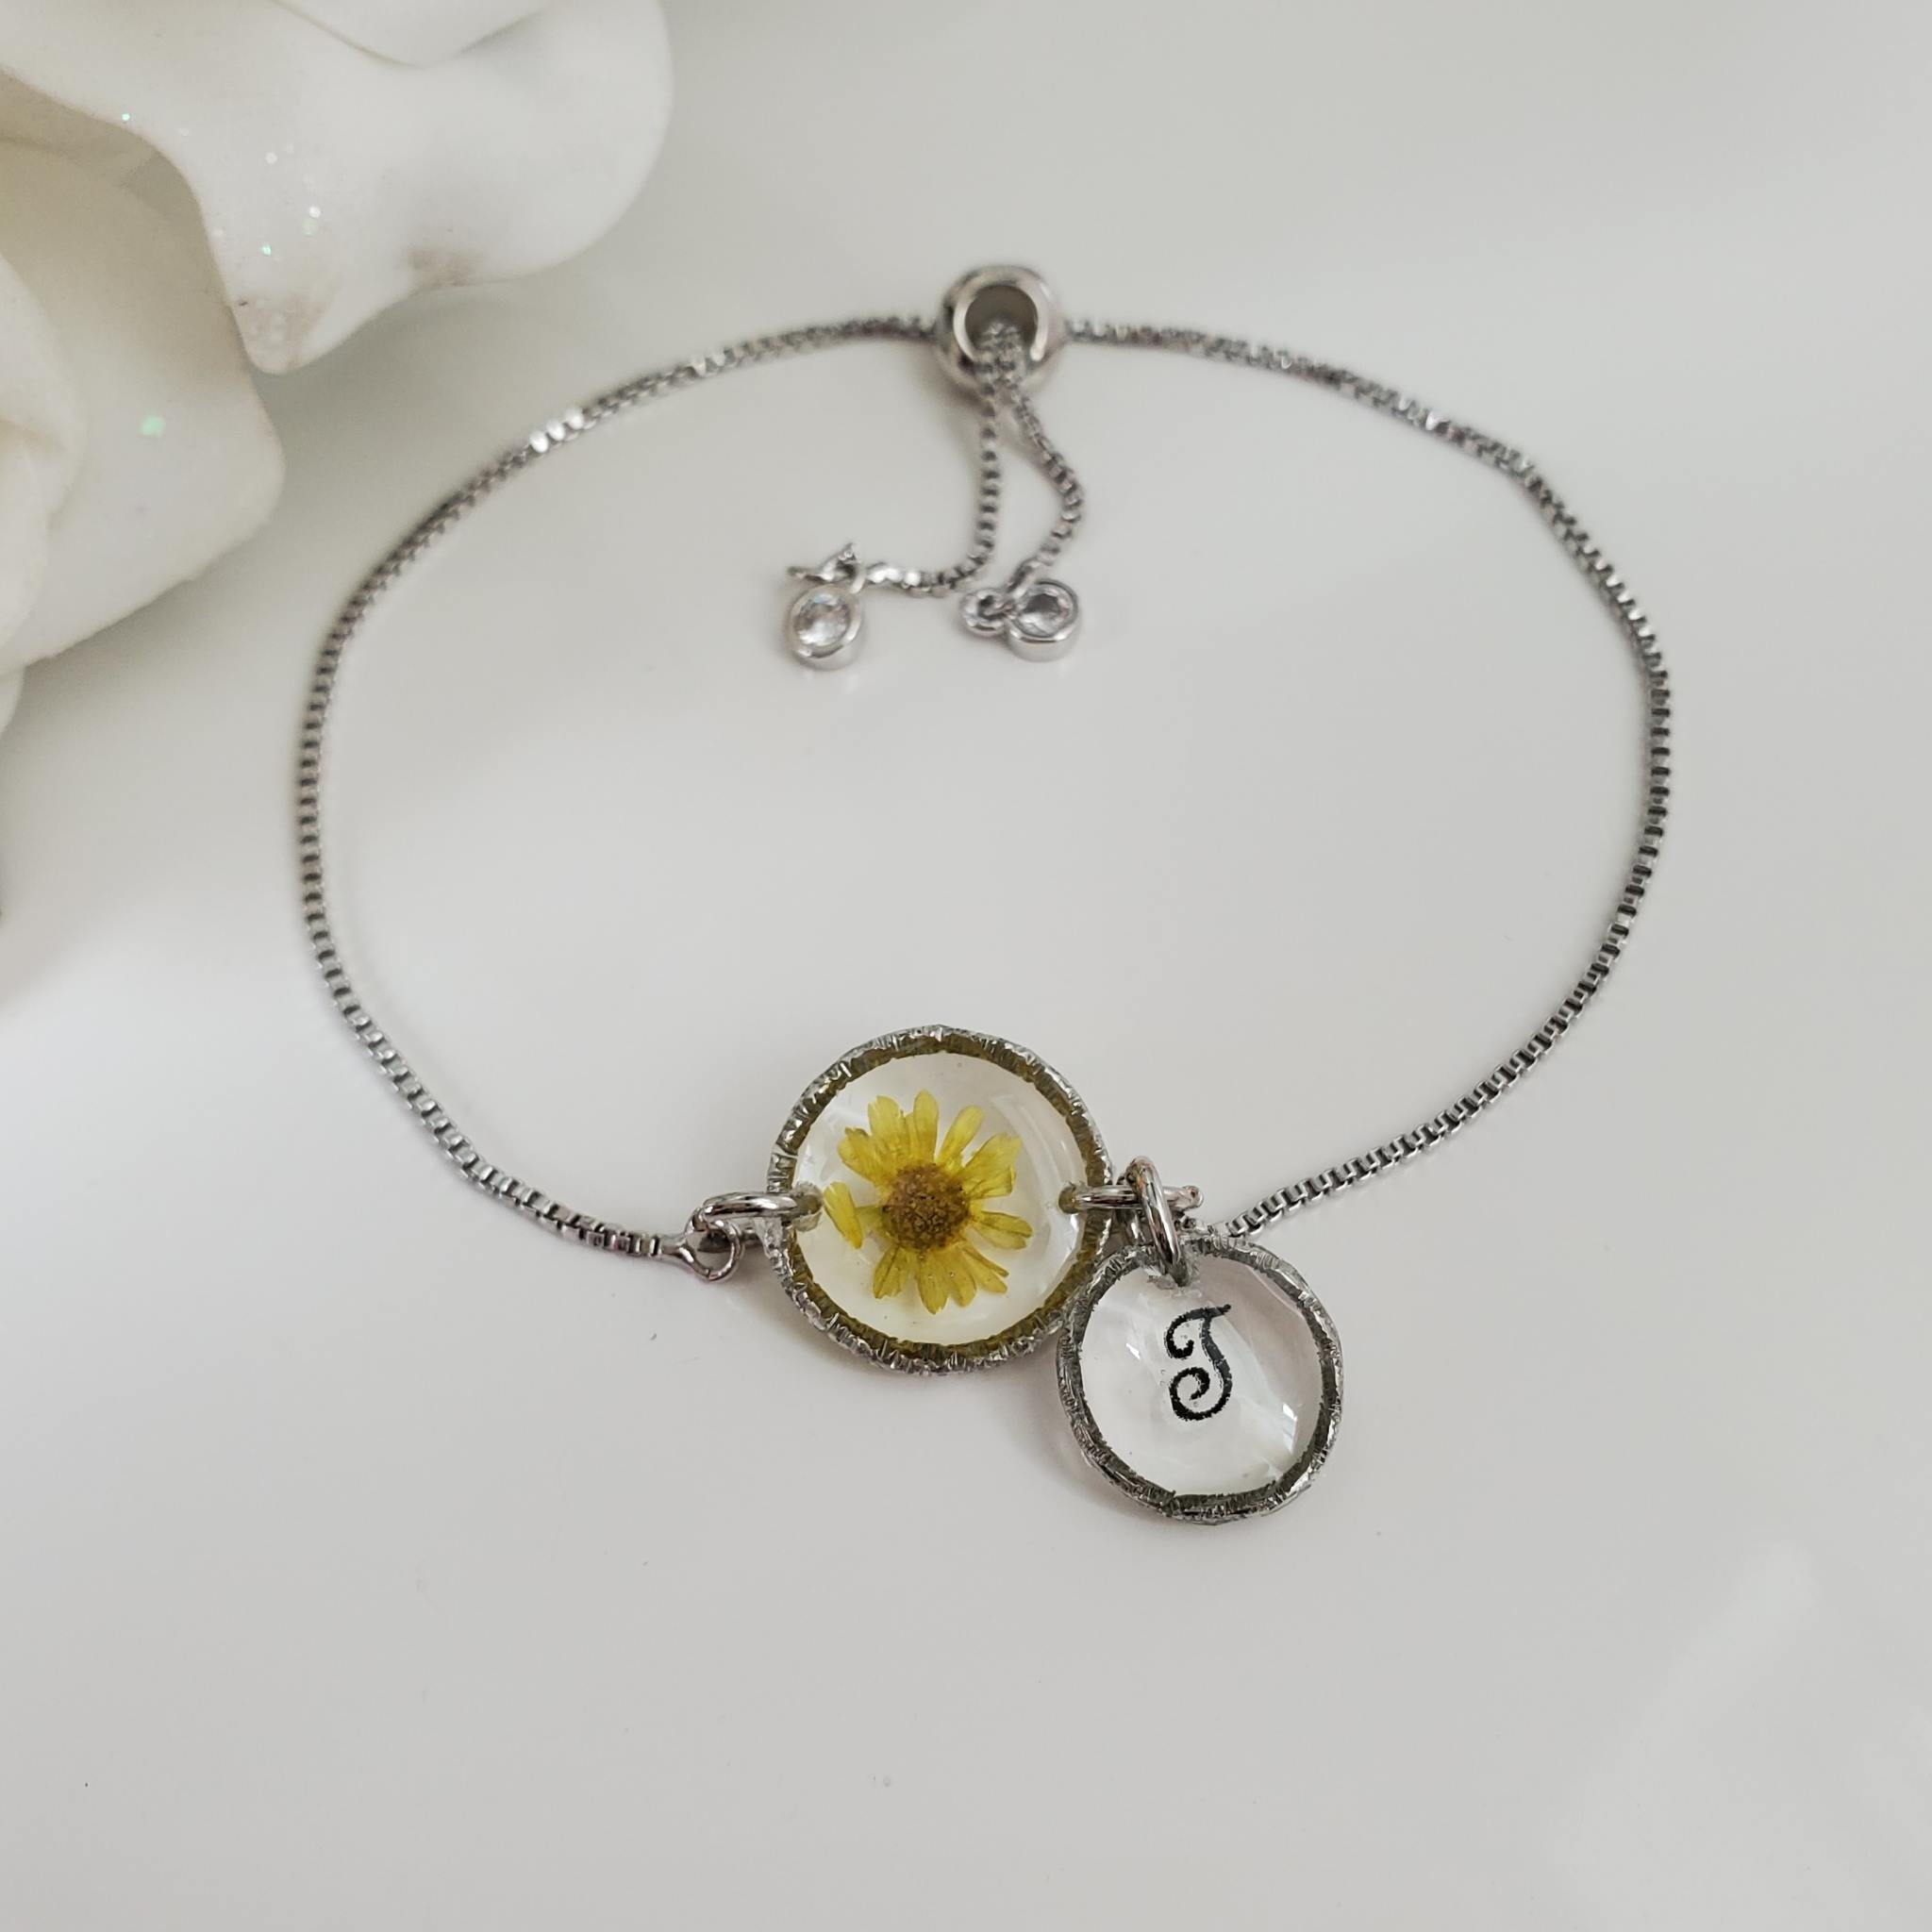 Real flower bracelet, real flower jewelry, handmade gift for her,  personalised gift, unique gift ideas, handmade bracelet